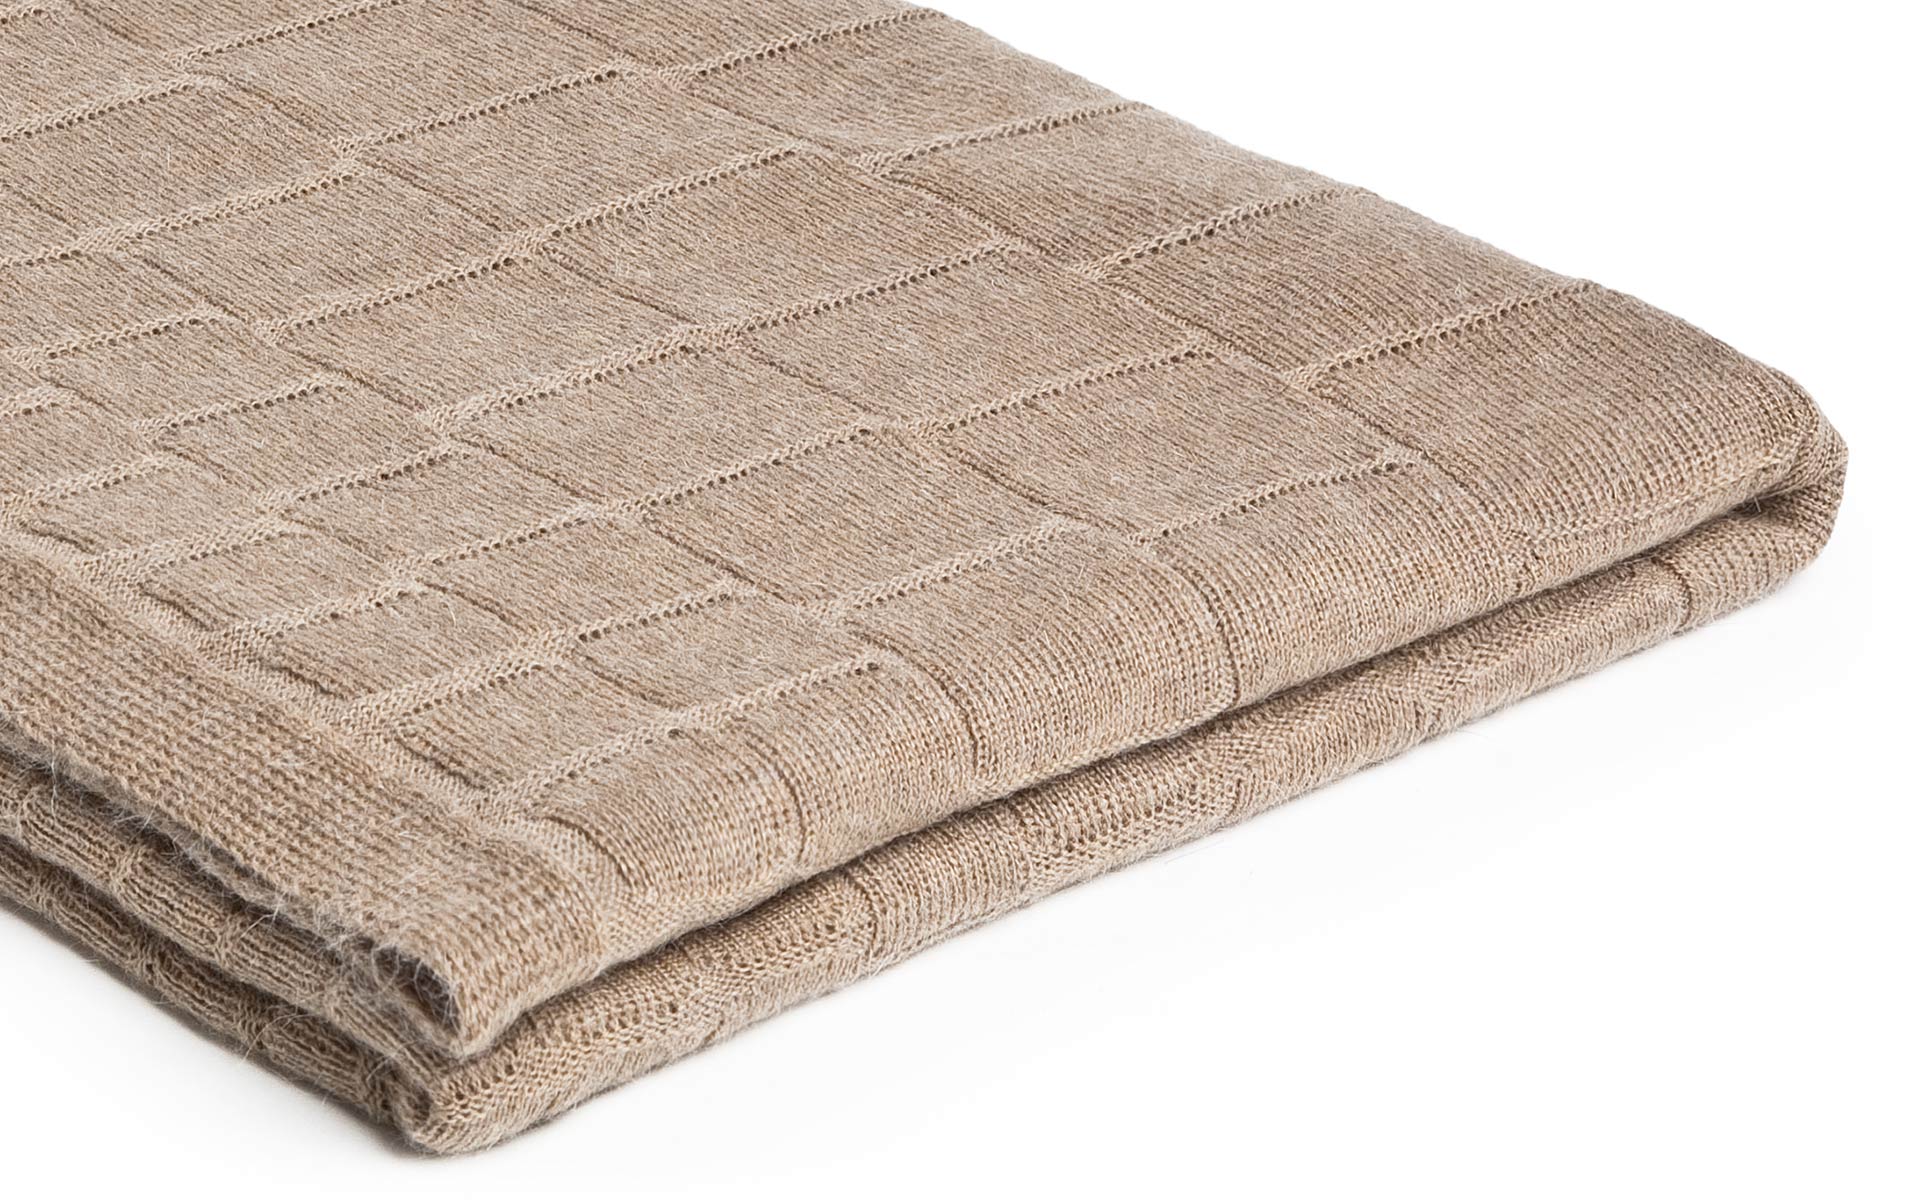 MrsMe blanket Croco Taupe detail1920x1200